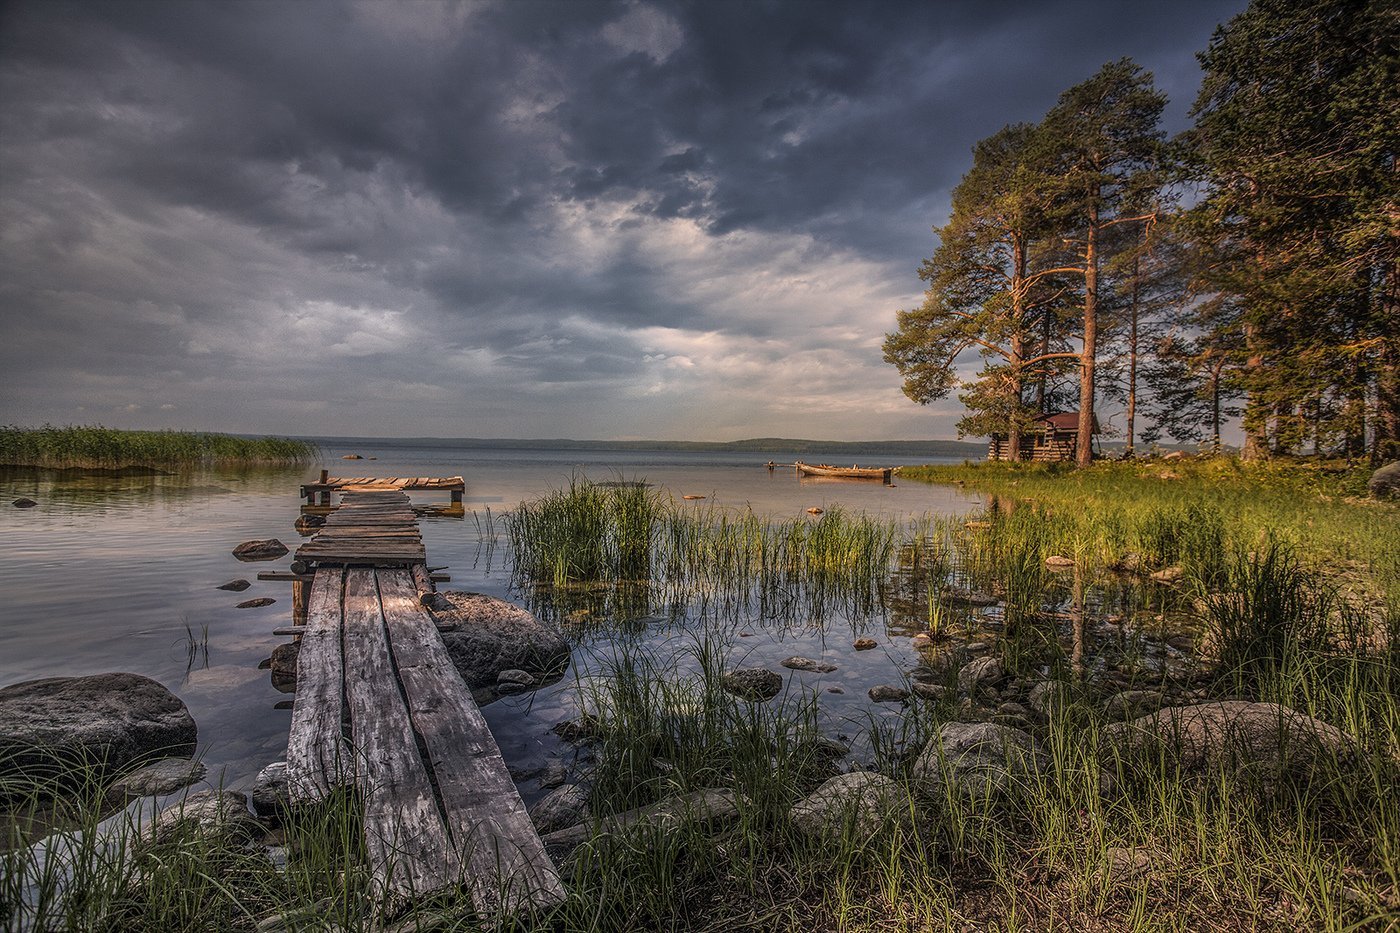 Территория онежского озера. Озеро Онега Карелия. Онега Онежское озеро. Природа Карелии Онежское озеро. Онежское озеро Петрозаводск.